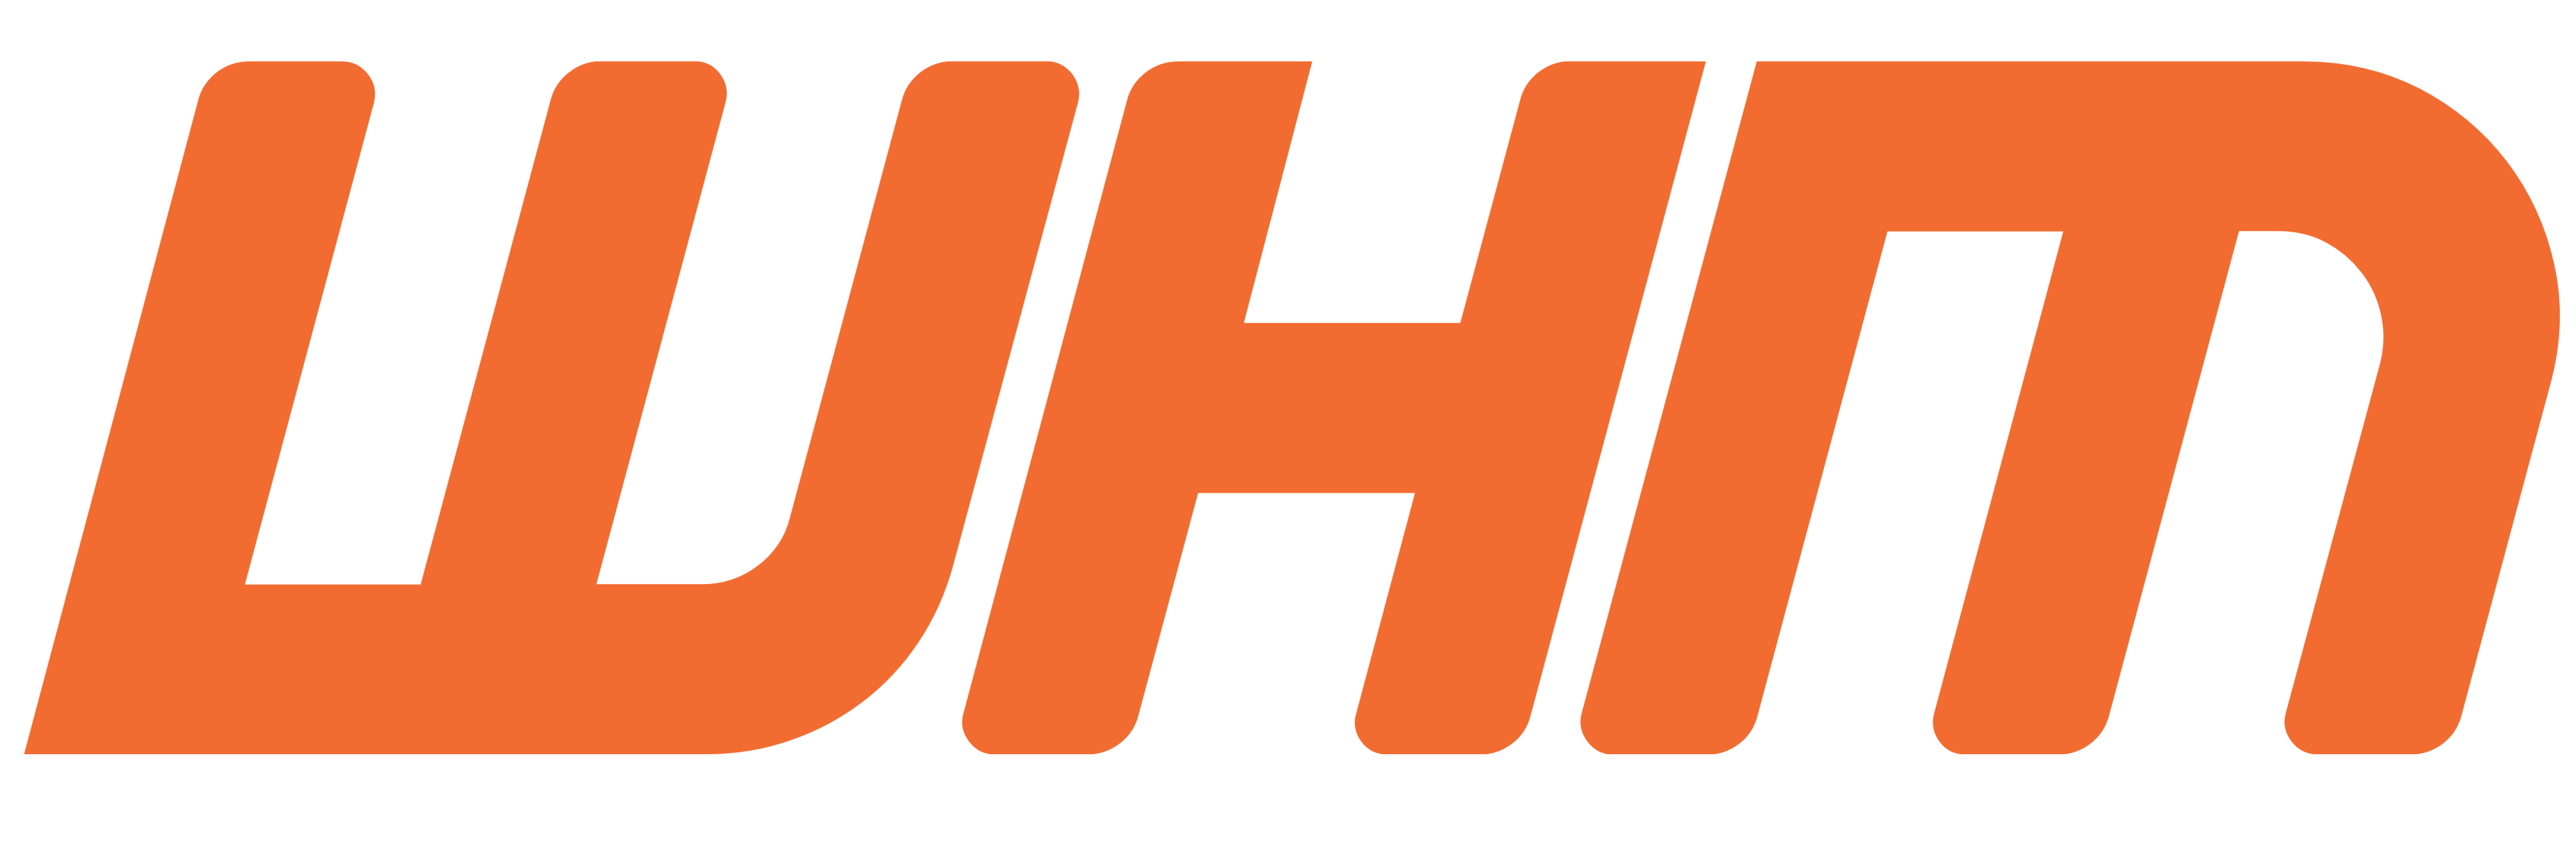 WHM logo, logotype